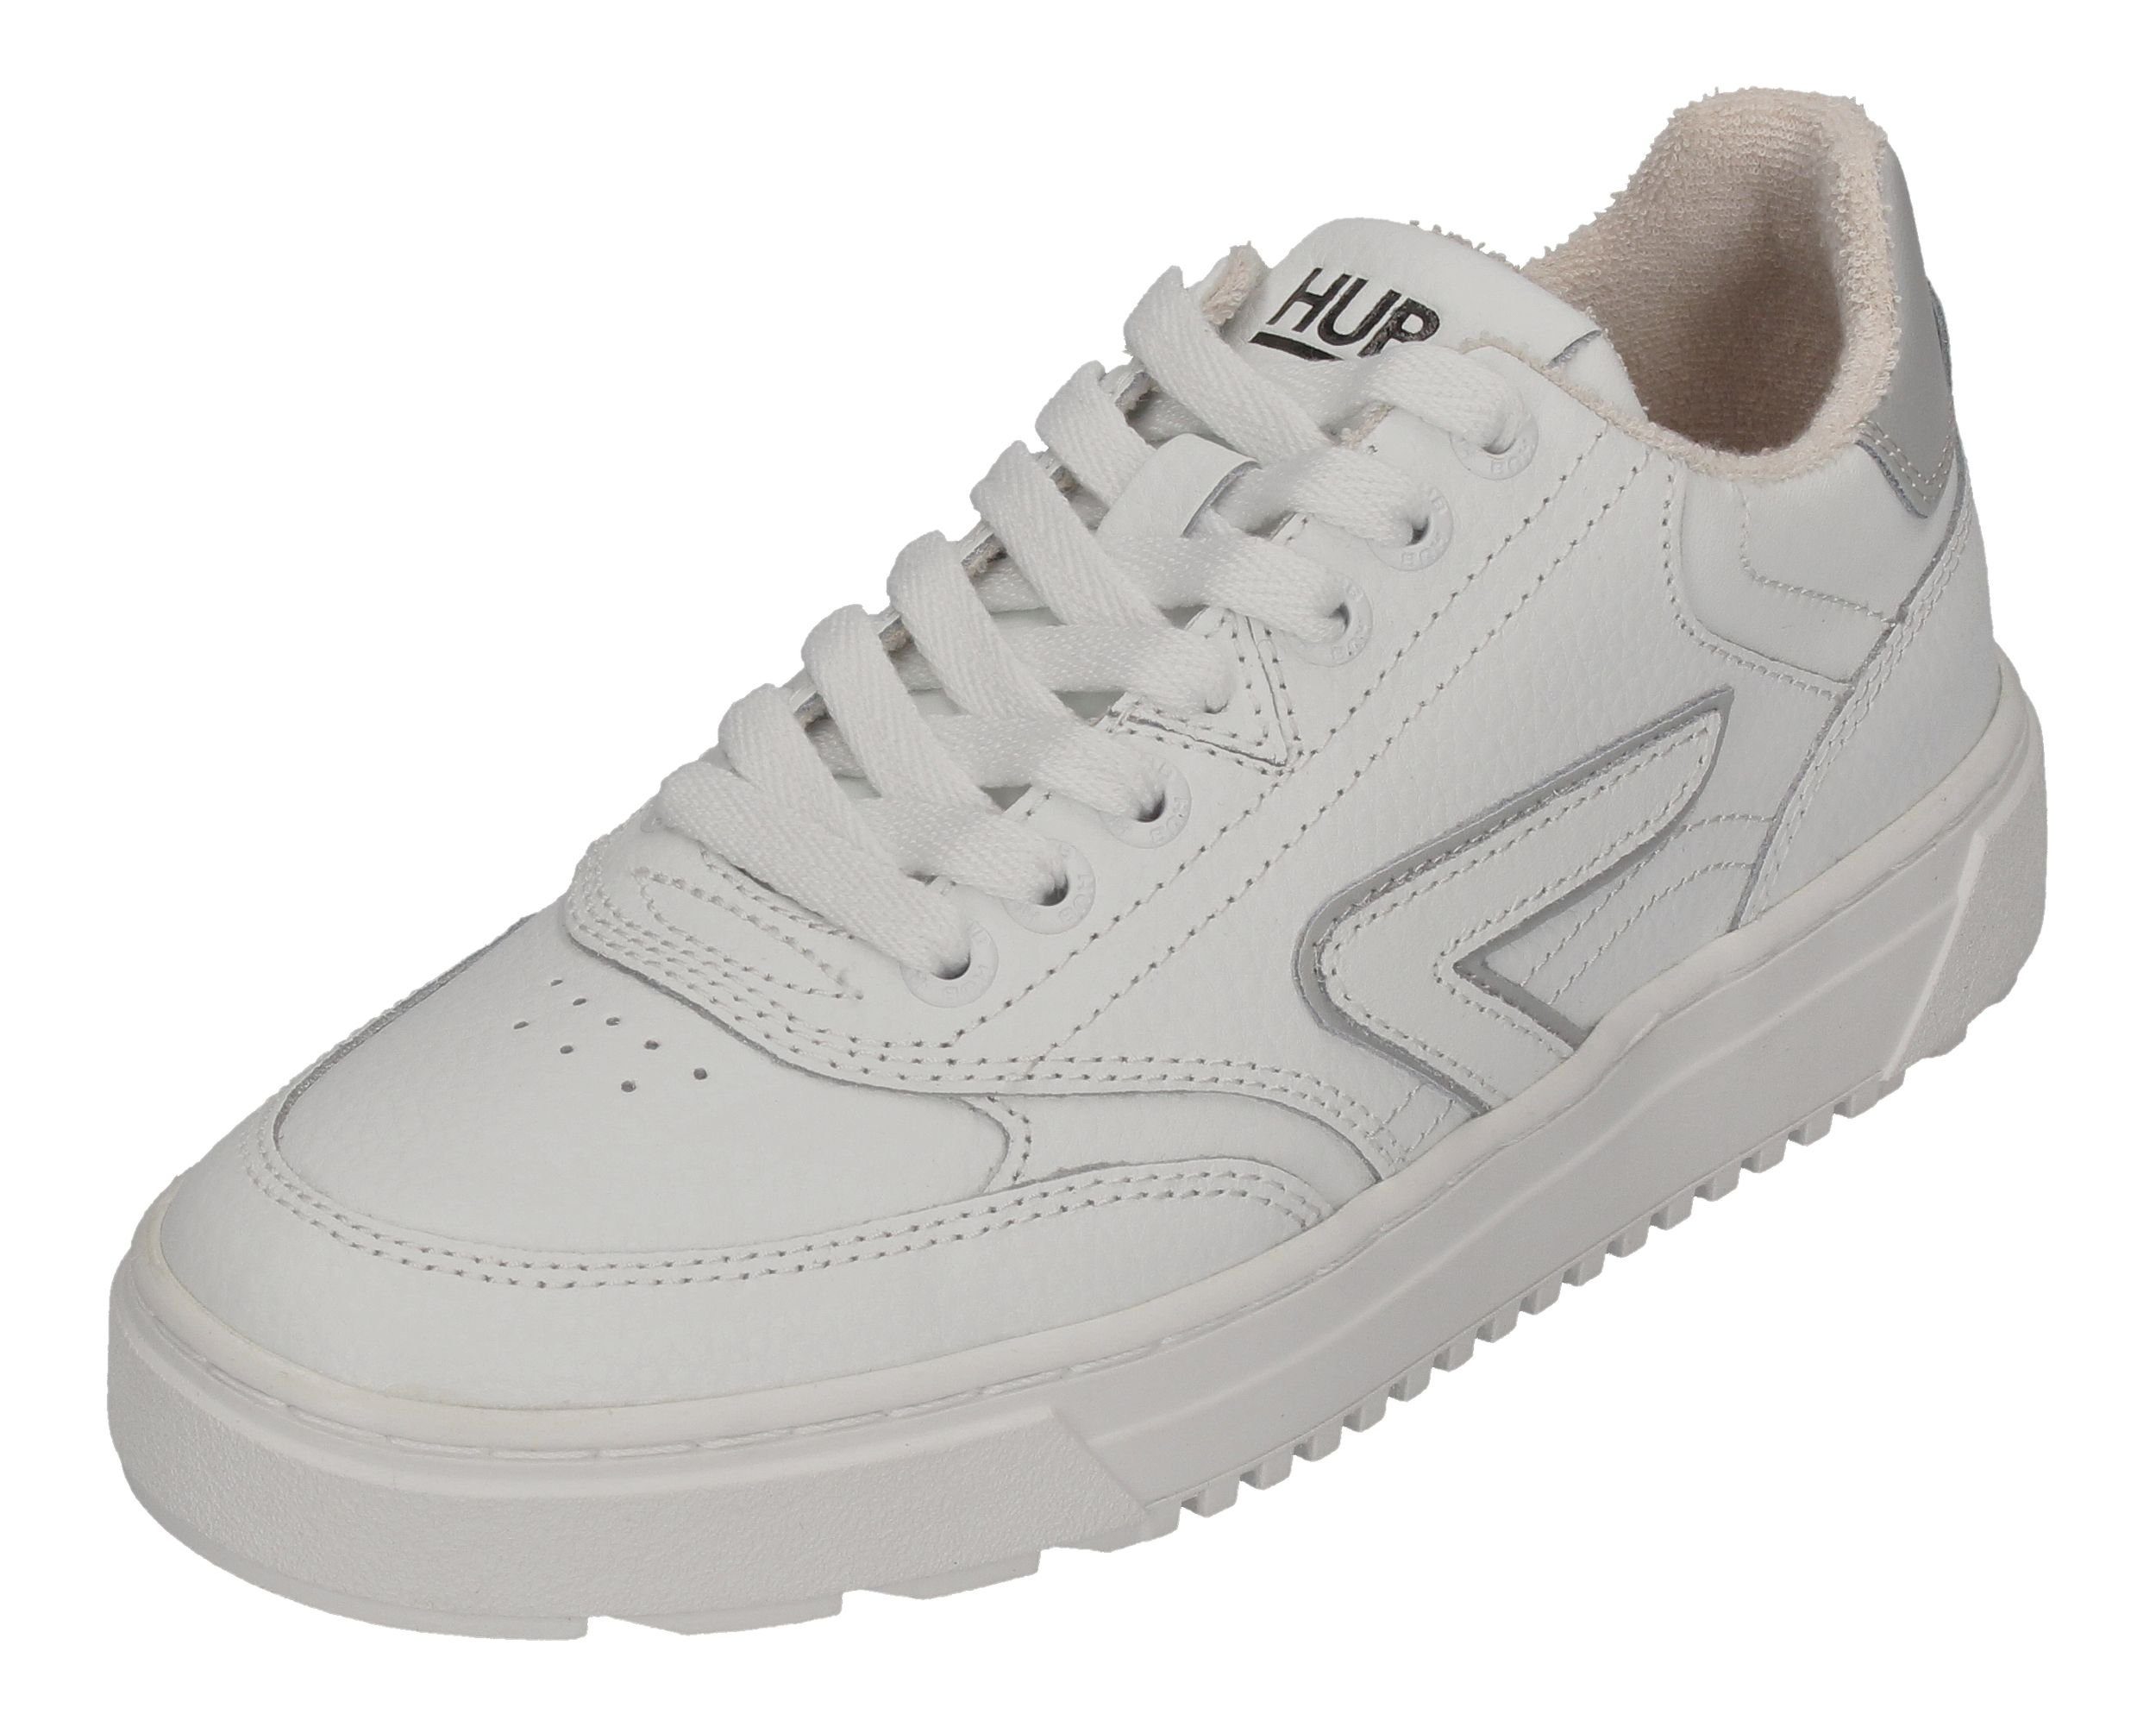 HUB Duke L31 Sneaker White Ice, Lässige Sneakers für Damen von HUB Footwear